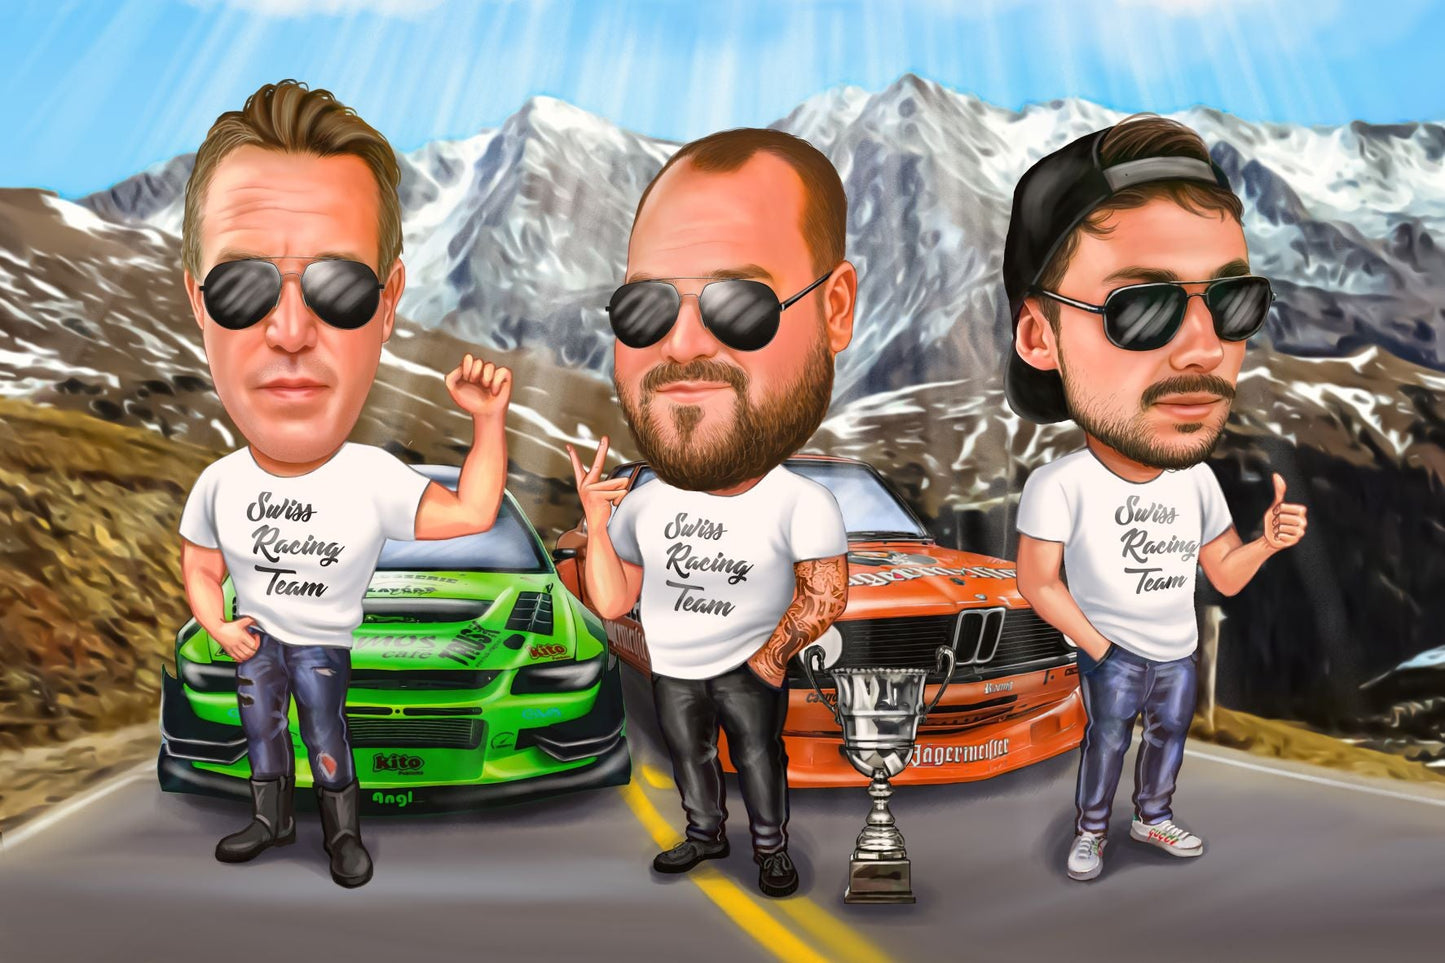 Racing team caricature